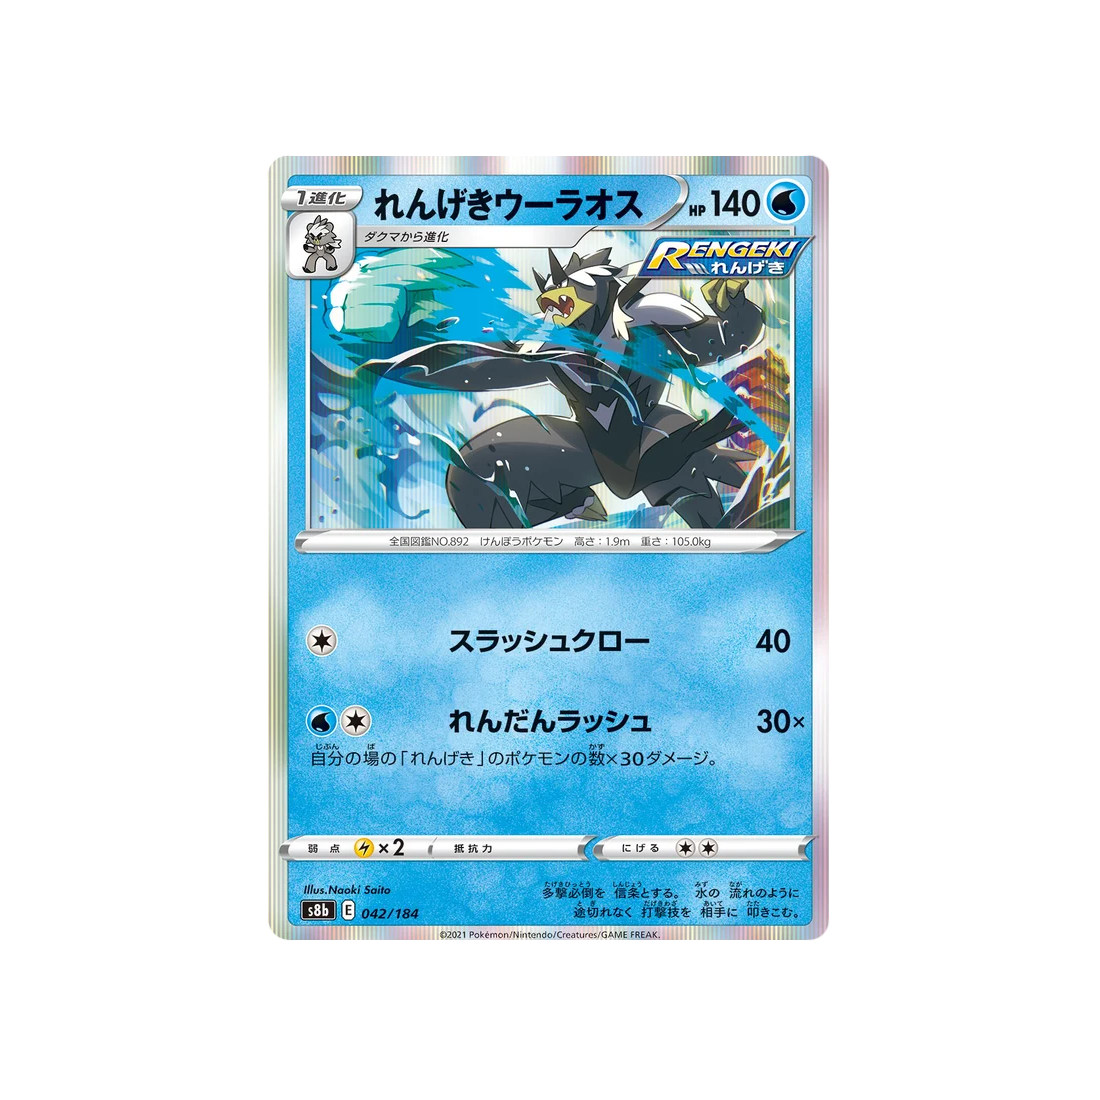 Carte Pokémon Climax S8b 042/184: Shifours Poing Final